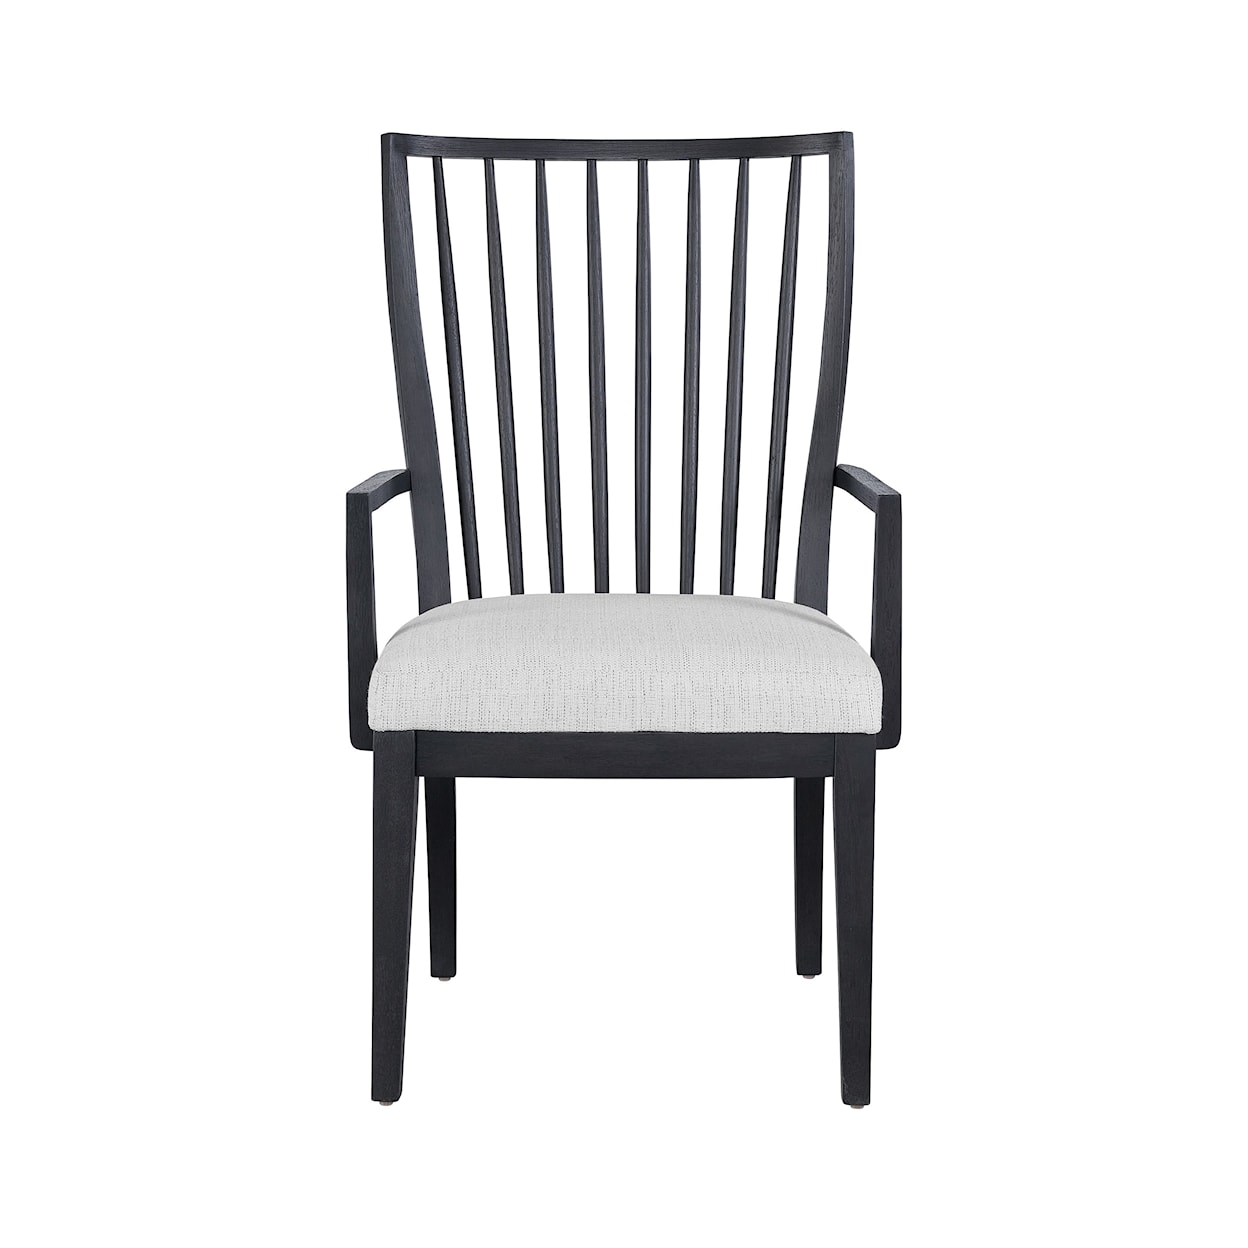 Universal Arlington Arlington Arm Chair